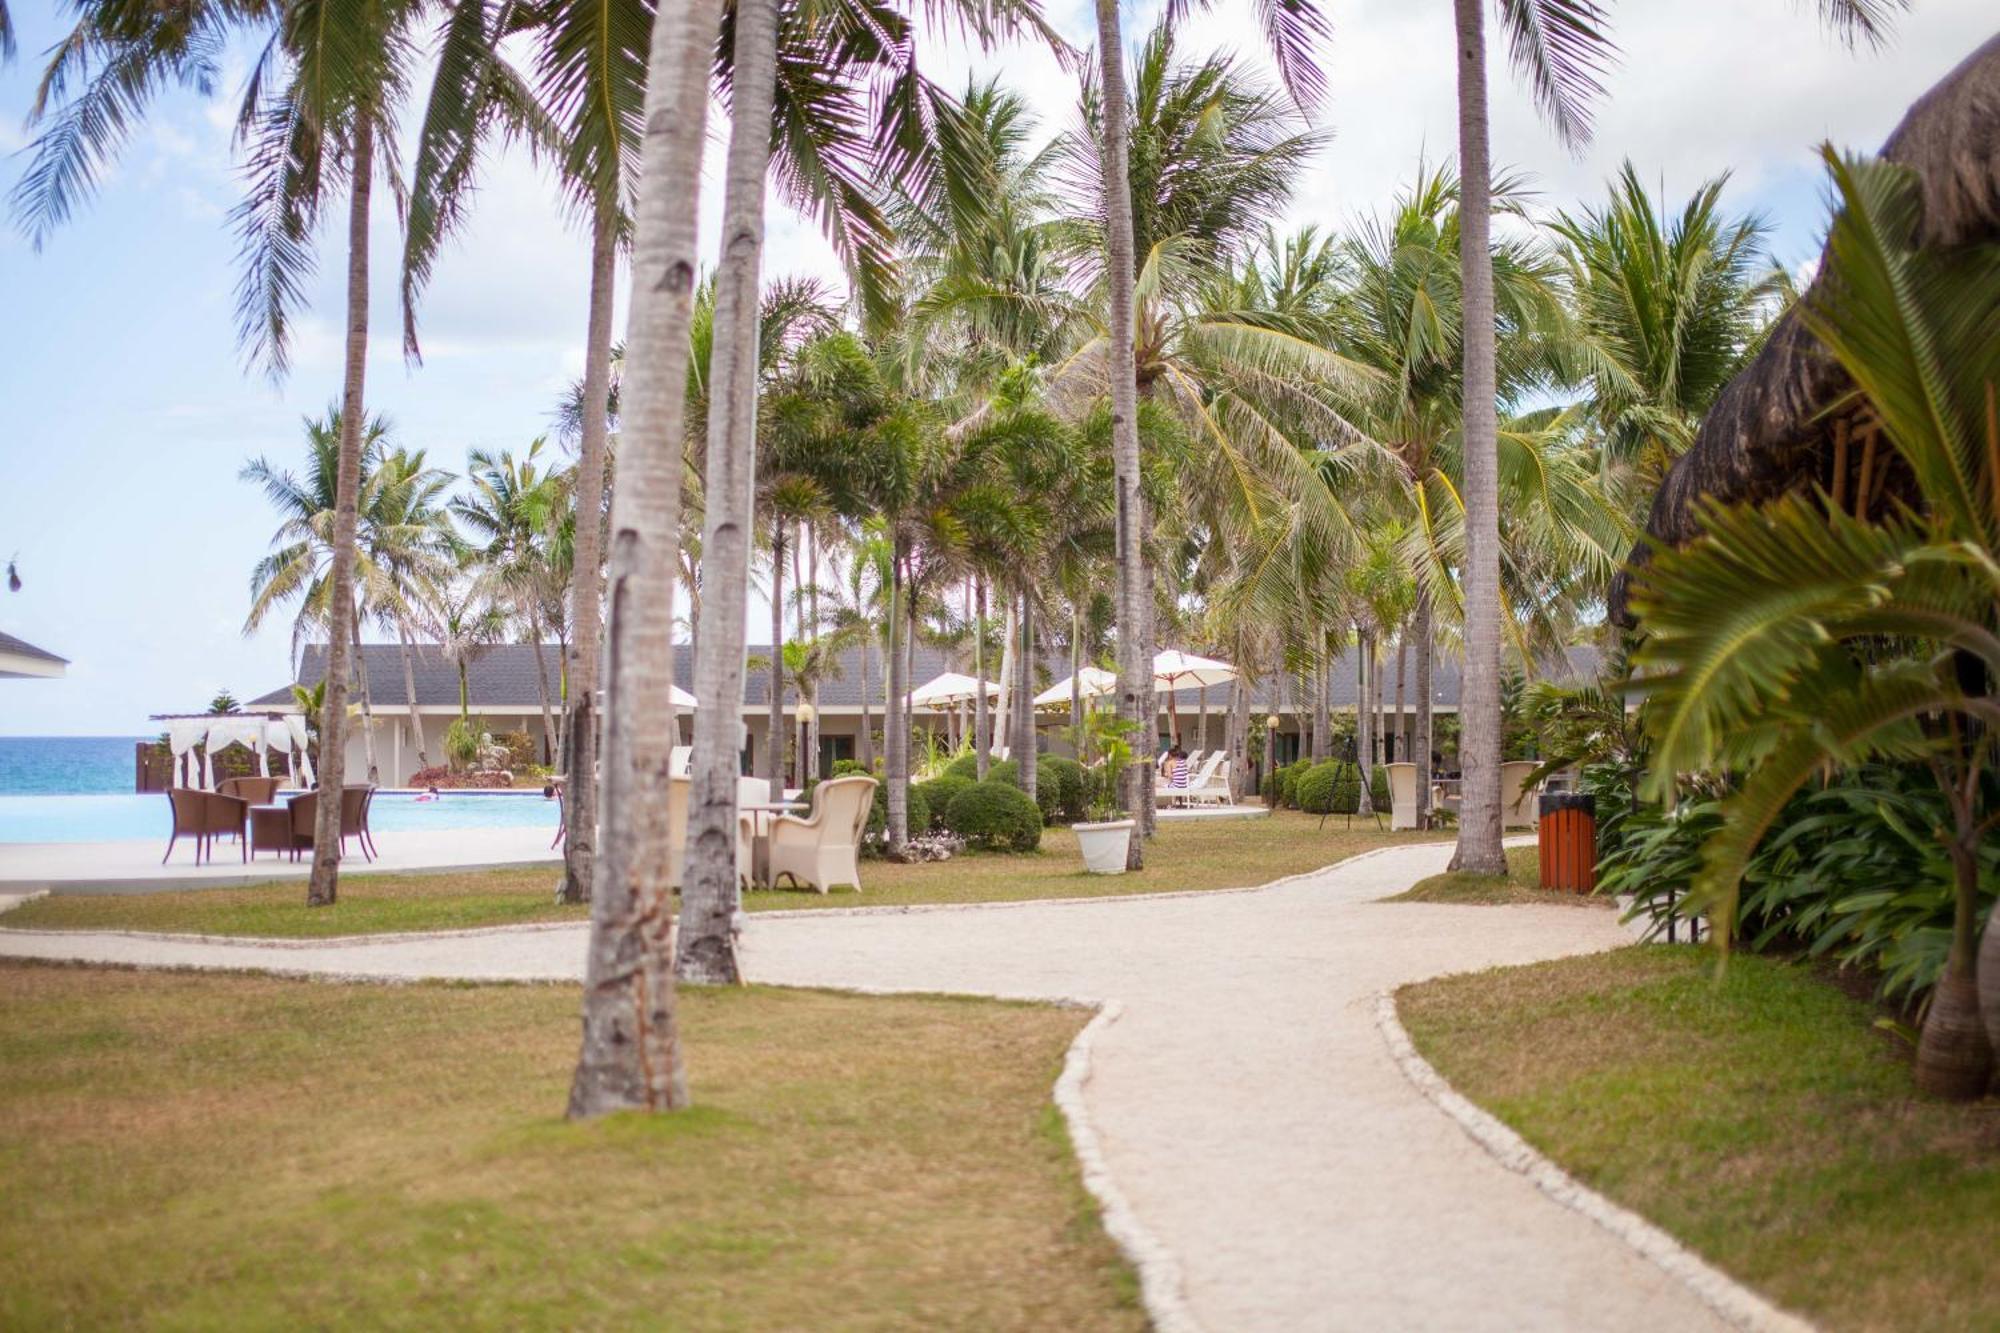 Mangodlong Paradise Beach Resort Himensulan Exteriér fotografie